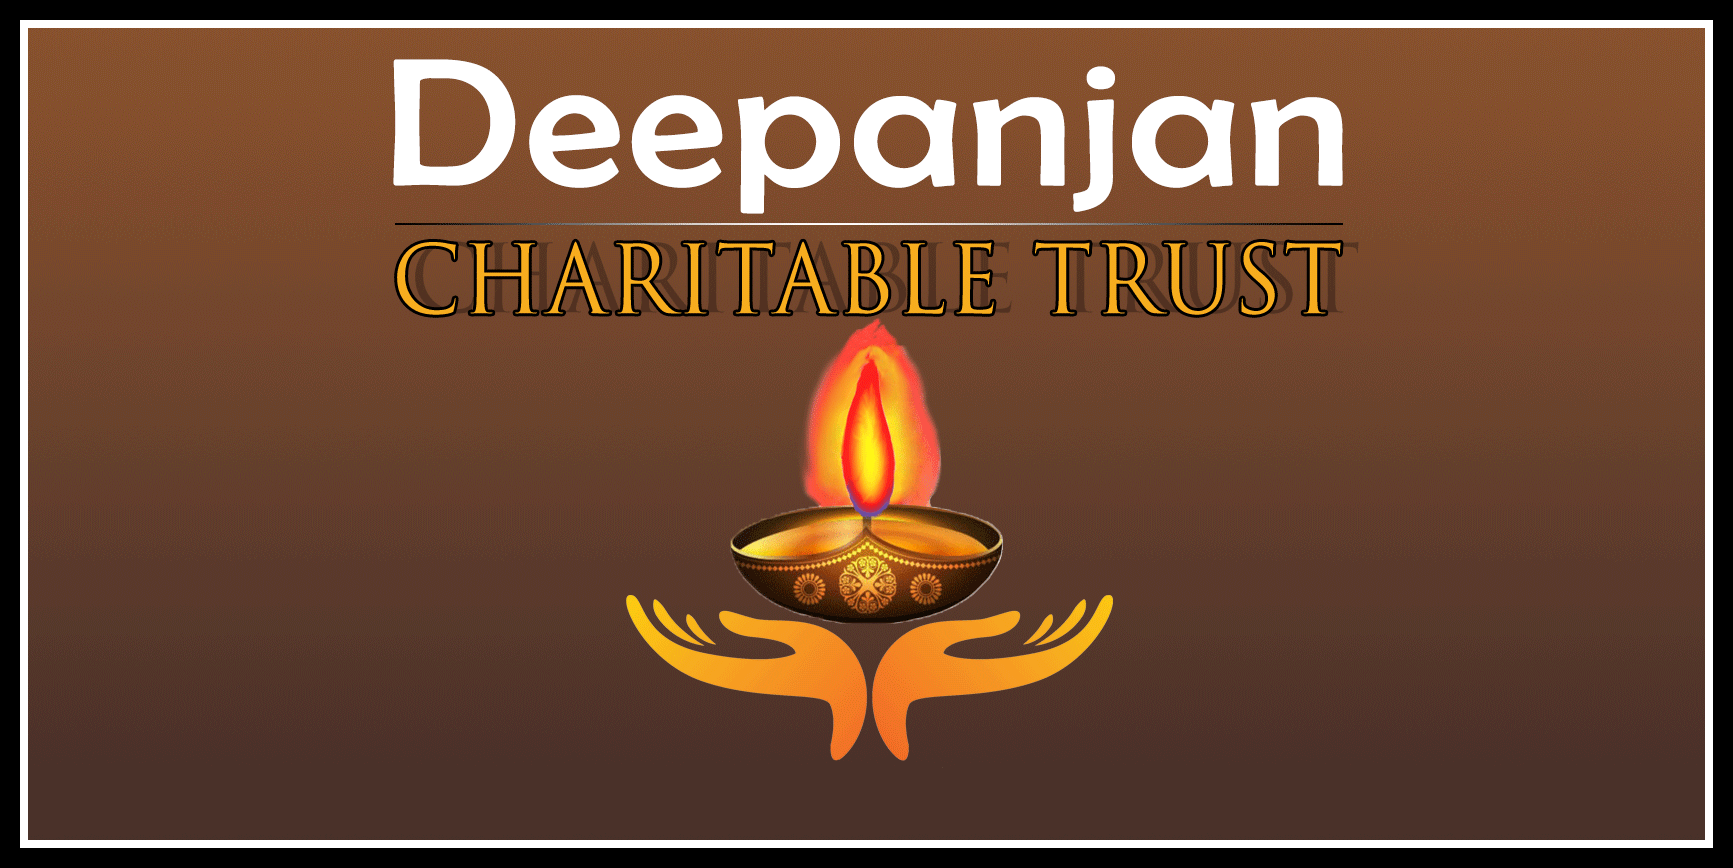 Deepanjan Charitable Trust